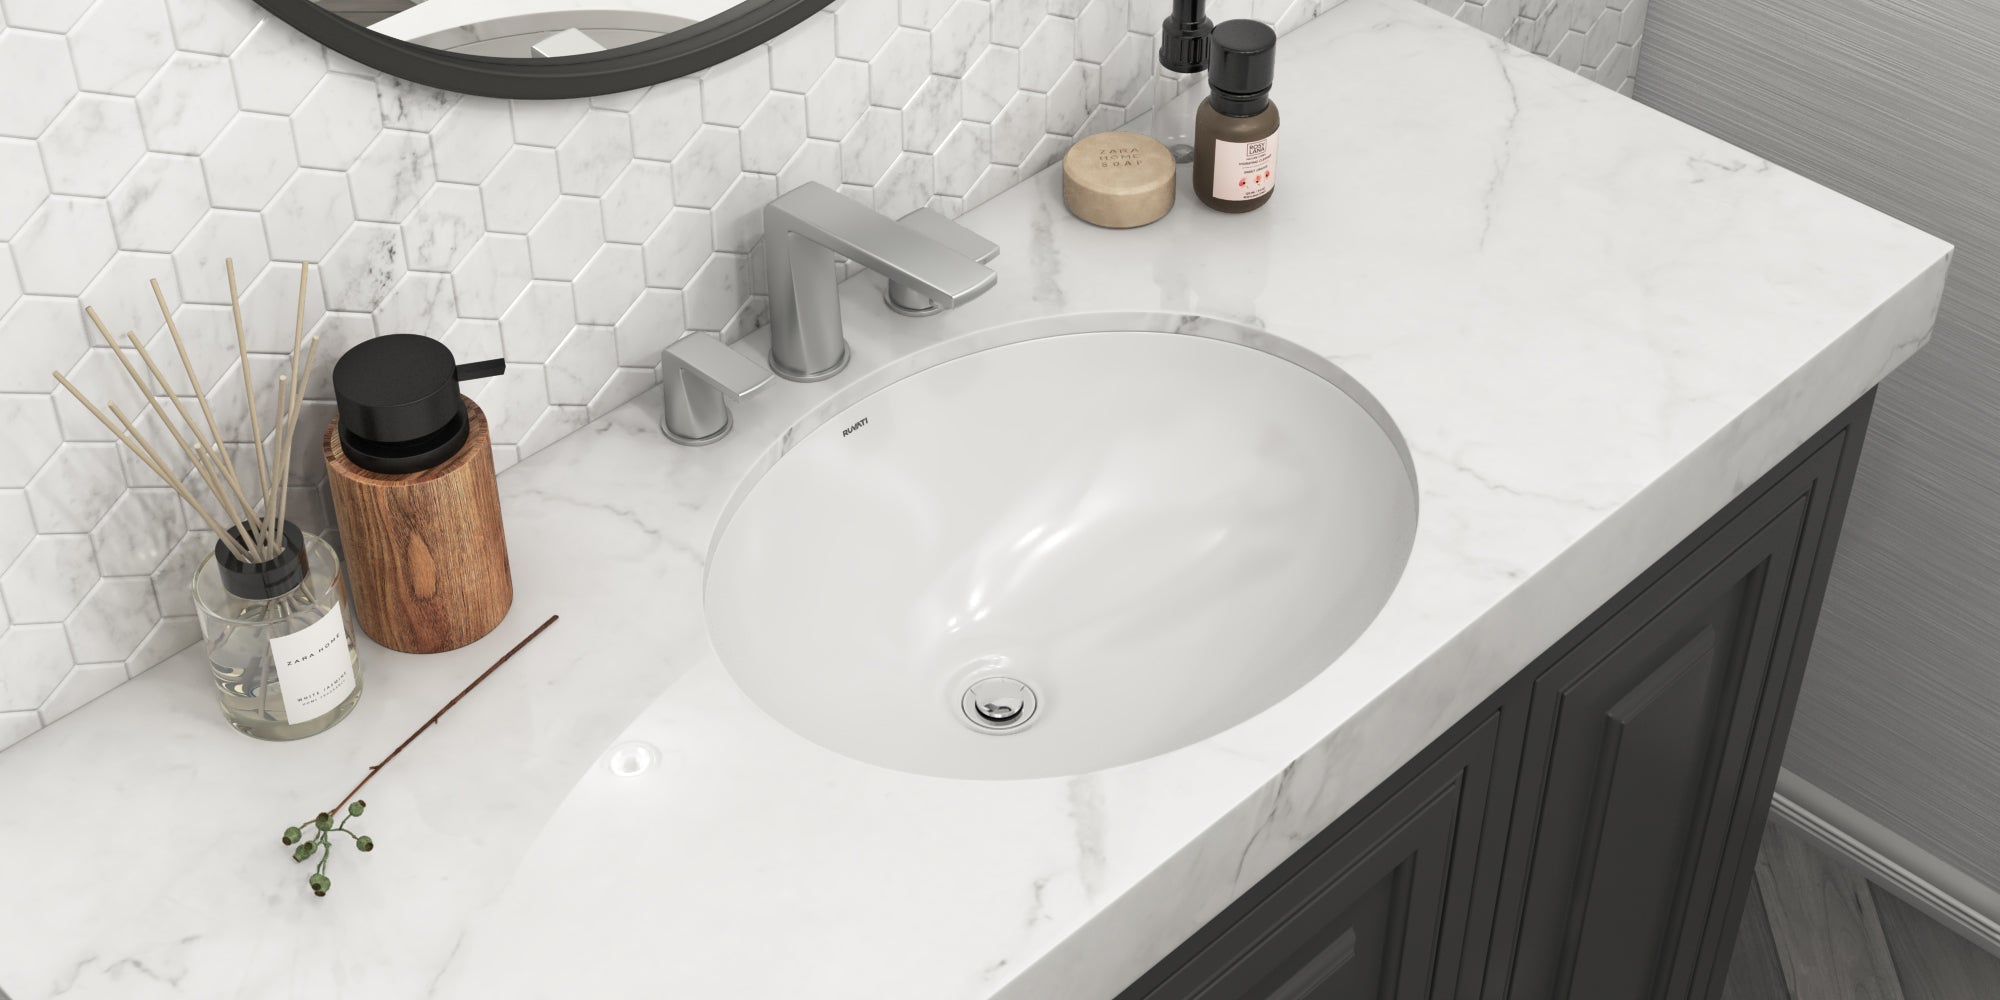 Ruvati 16" x 13" Oval Undermount Bathroom Sink in White